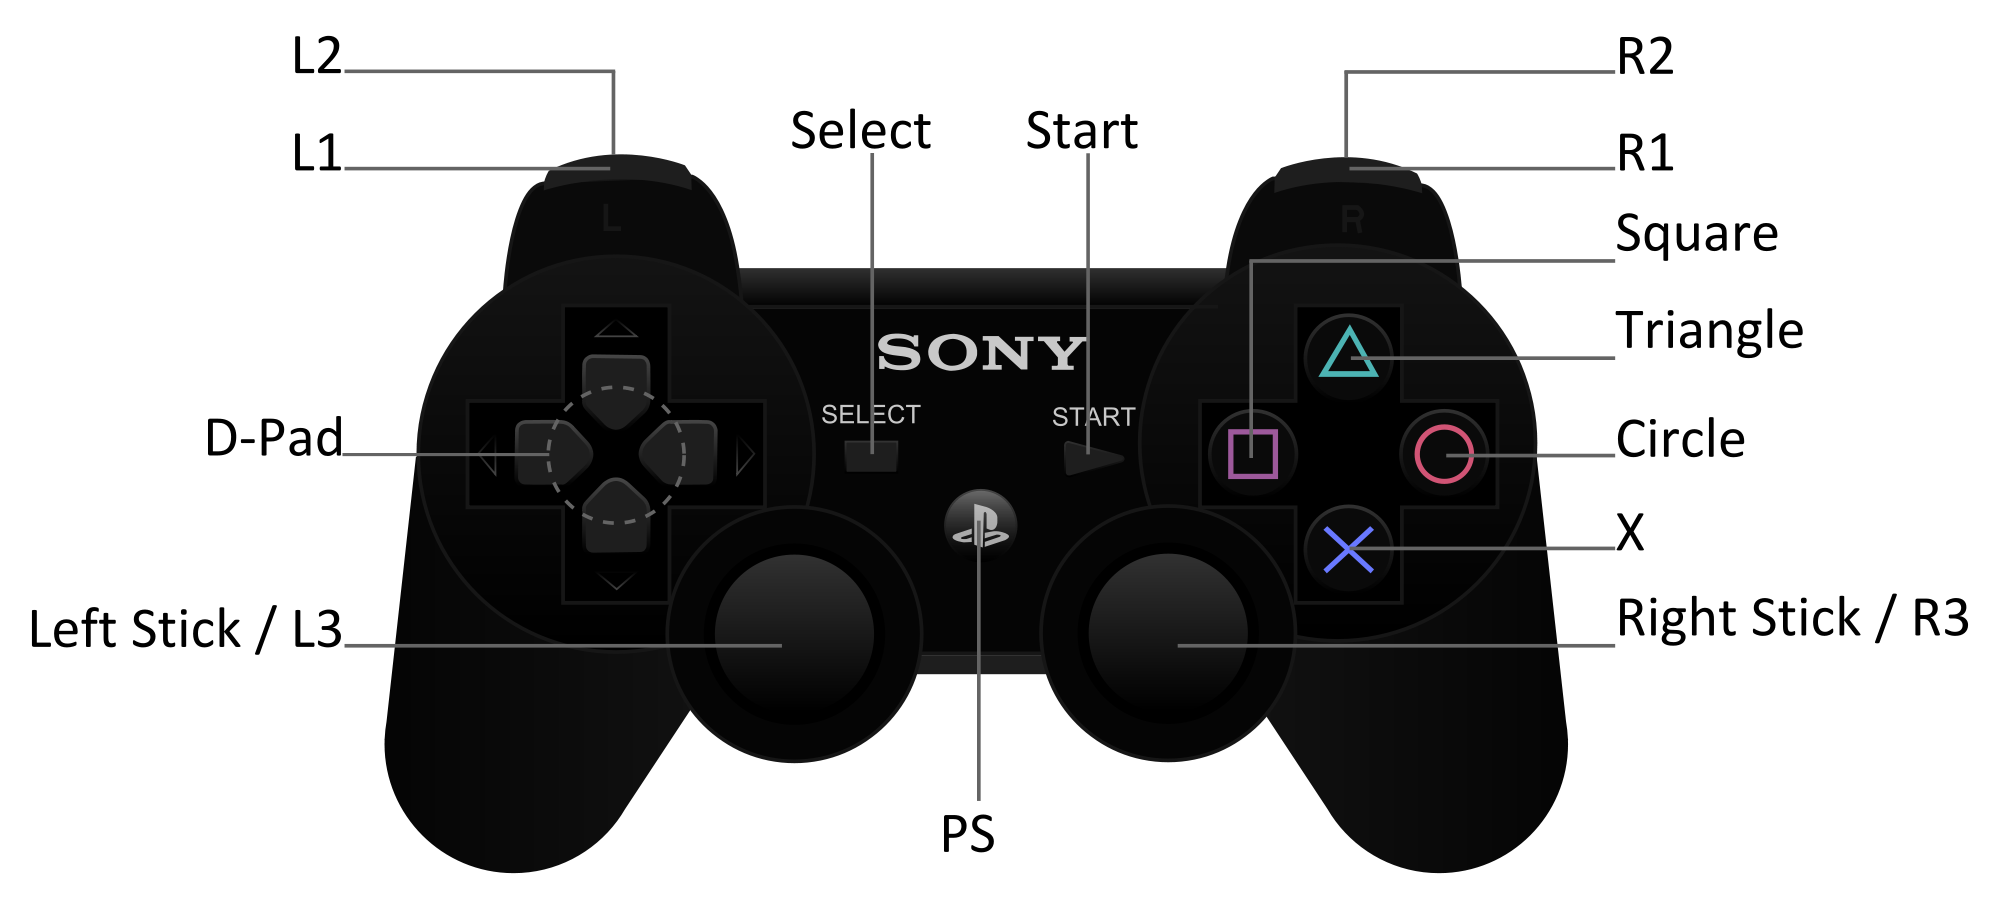 Ps4 геймпад кнопка r3. Кнопка r на джойстике Sony PLAYSTATION 4. L3 кнопка на джойстике пс3. L2 lt на джойстике ps5.